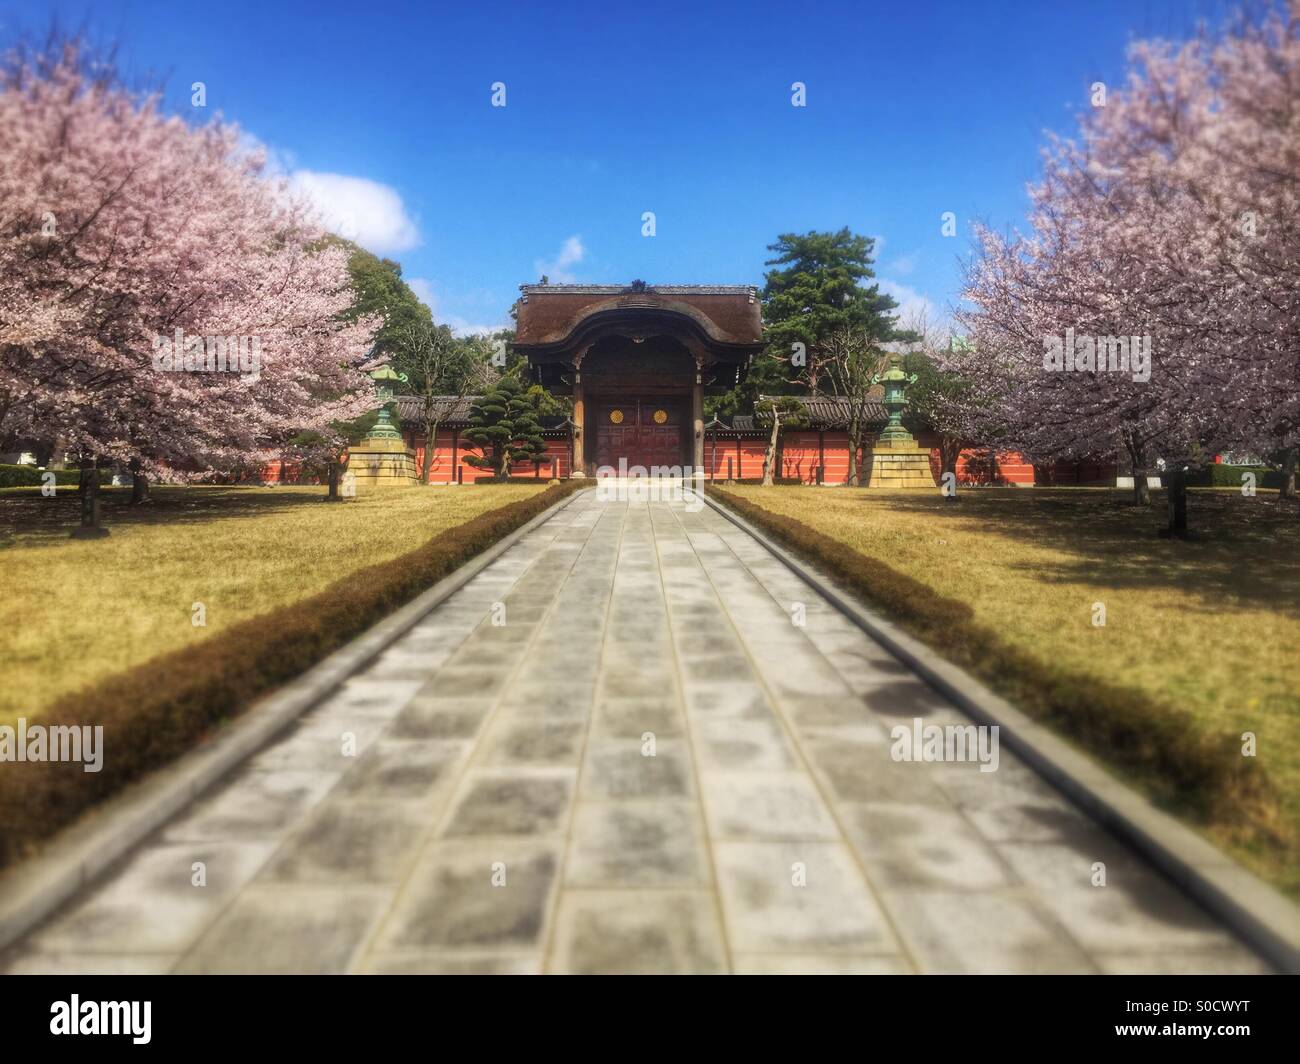 Karamon or traditional gate at Soji-ji, a Buddhist temple in Tsurumi Ward, Yokohama City, Japan, with sakura or cherry blossoms in Spring. Stock Photo